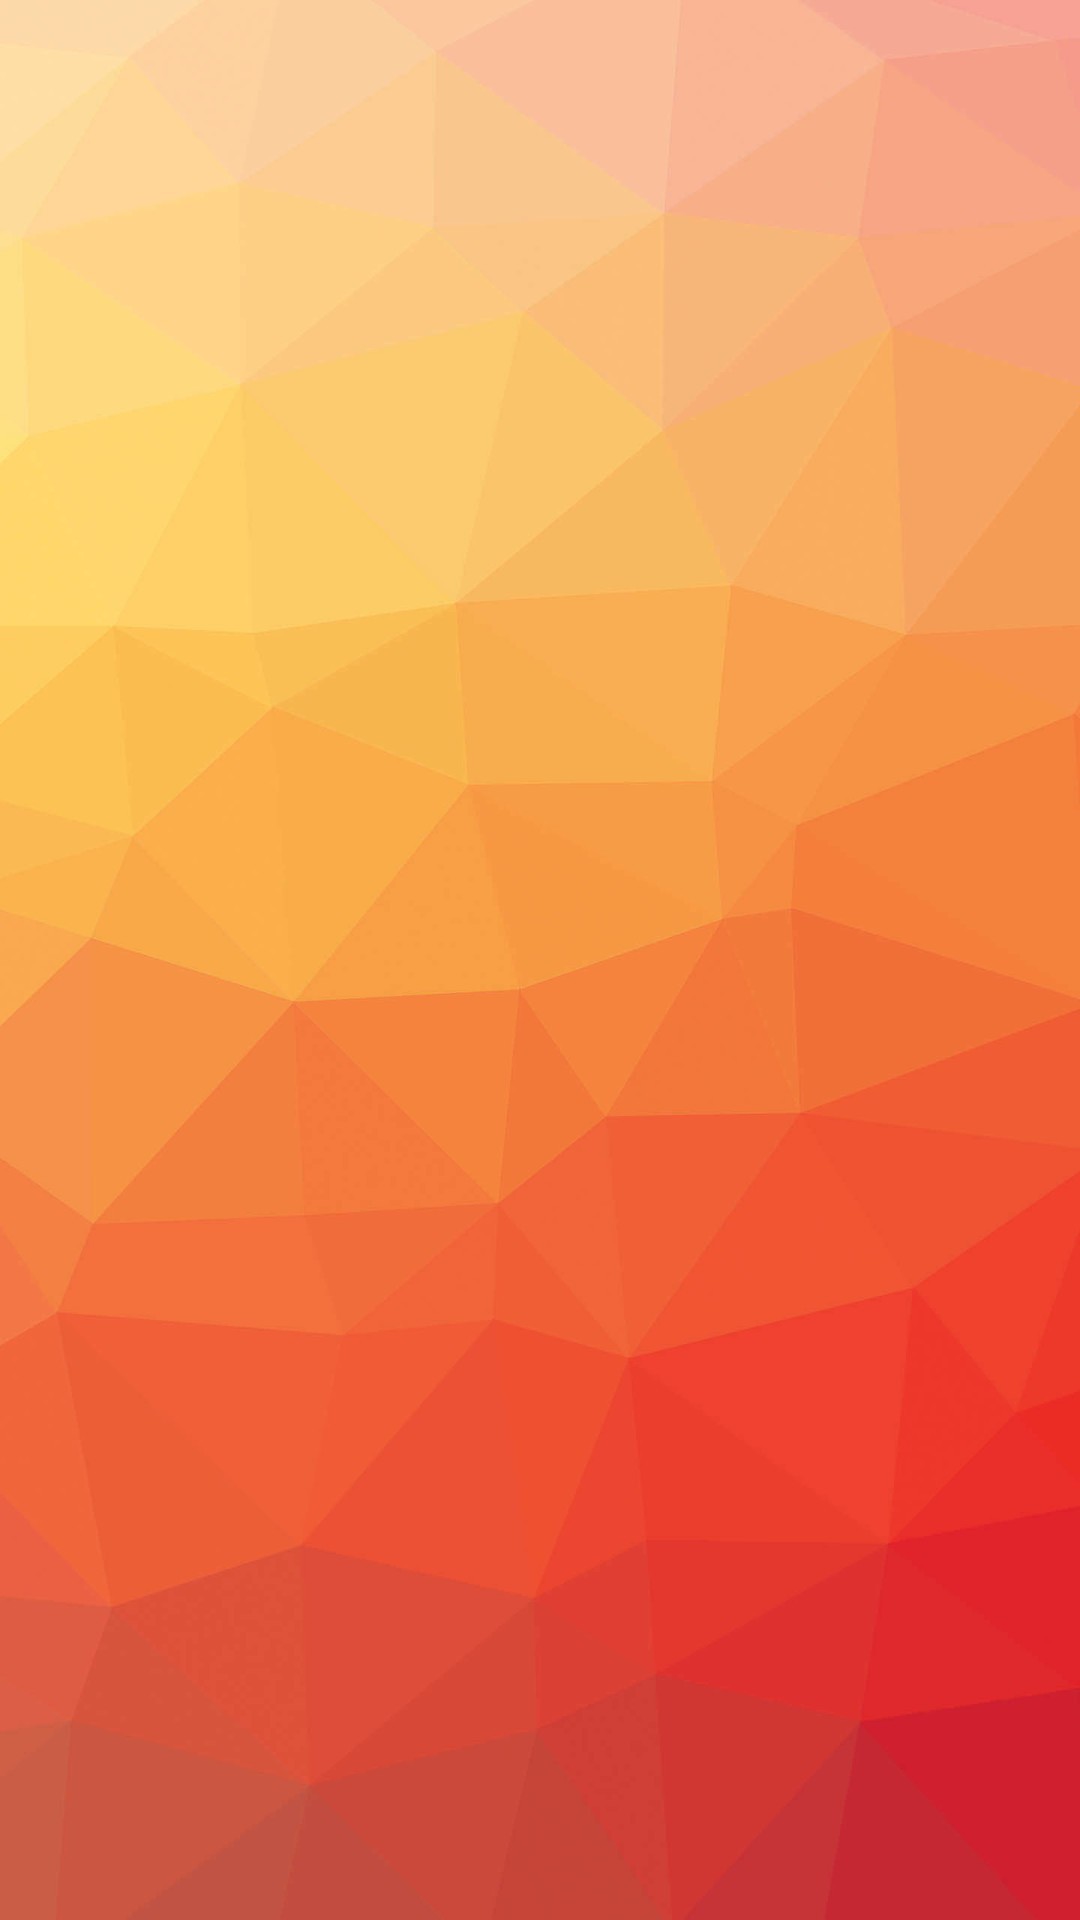 simple pattern wallpaper,orange,red,yellow,sky,peach